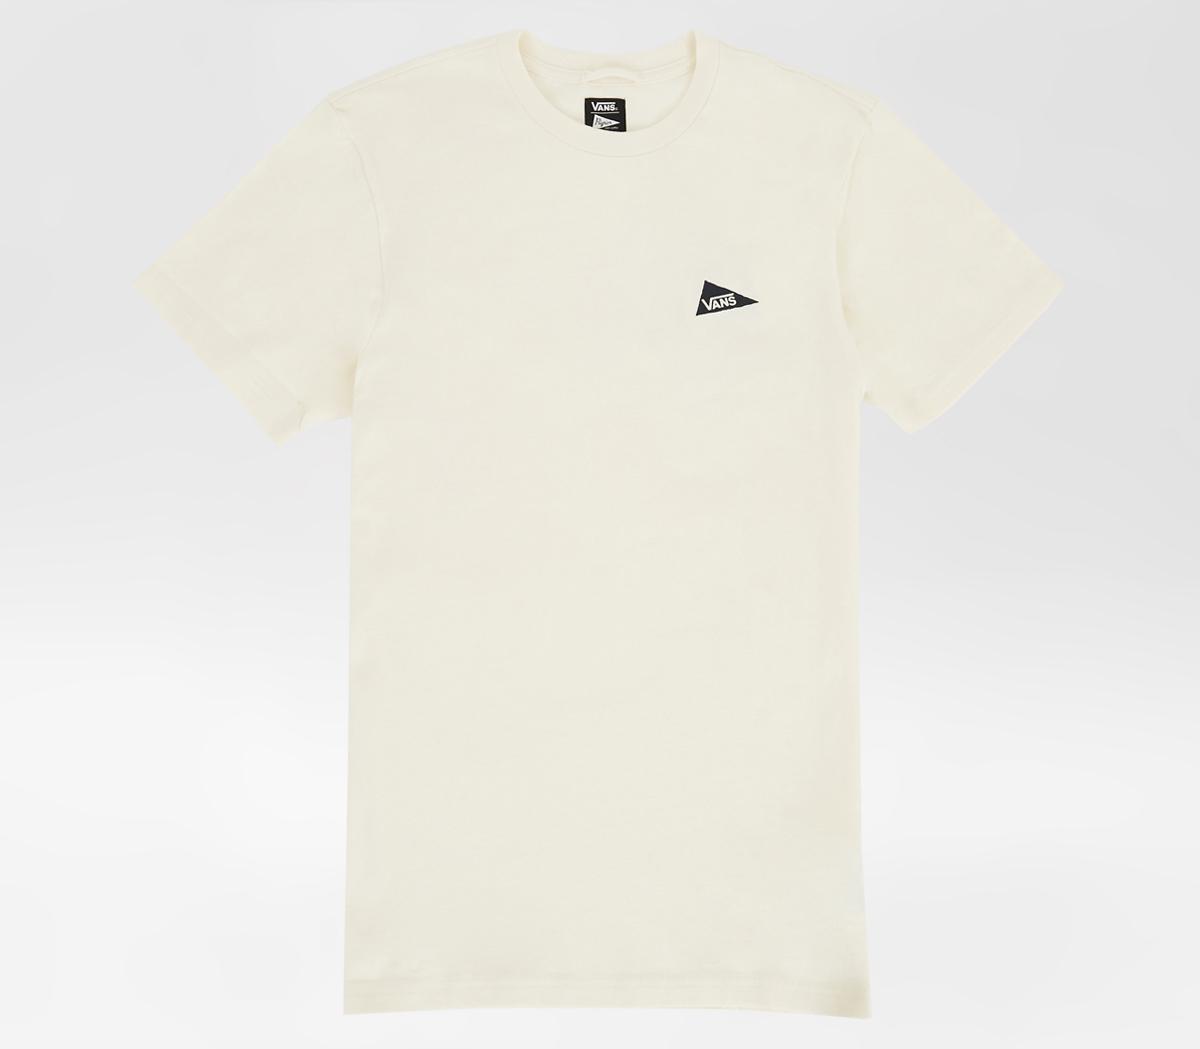 VansVans X Pilgrim Surf Supply Pennant T-shirtAntique White